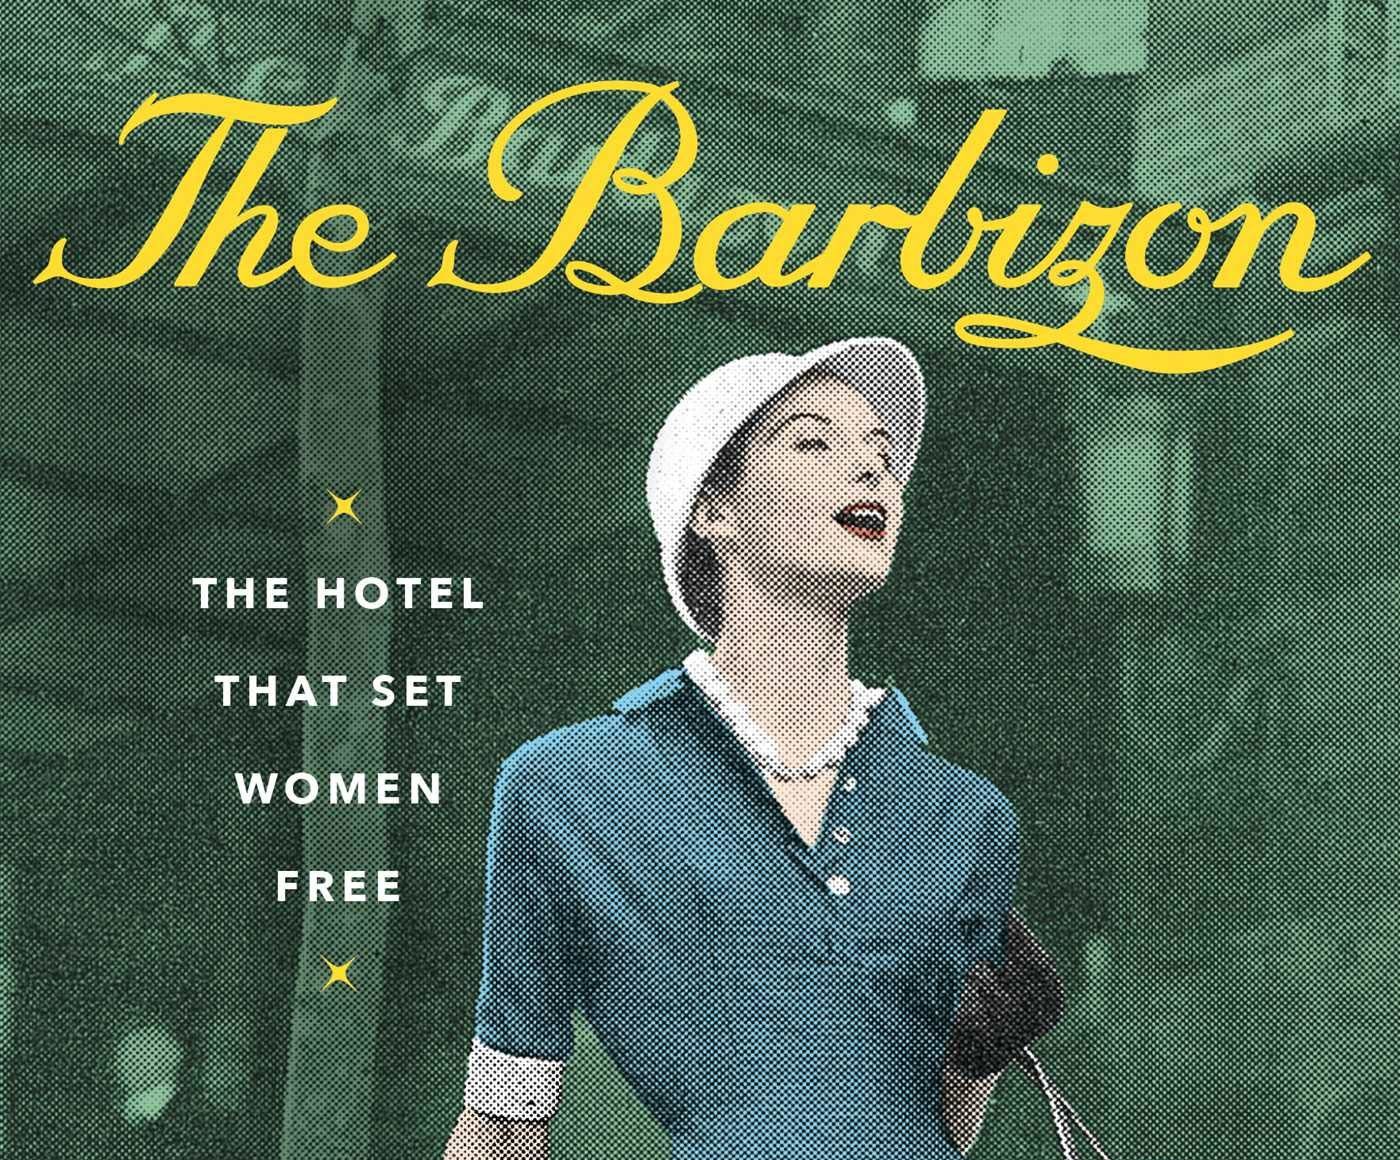 The Barbizon Hotel: A sanctuary for women in midtown Manhattan